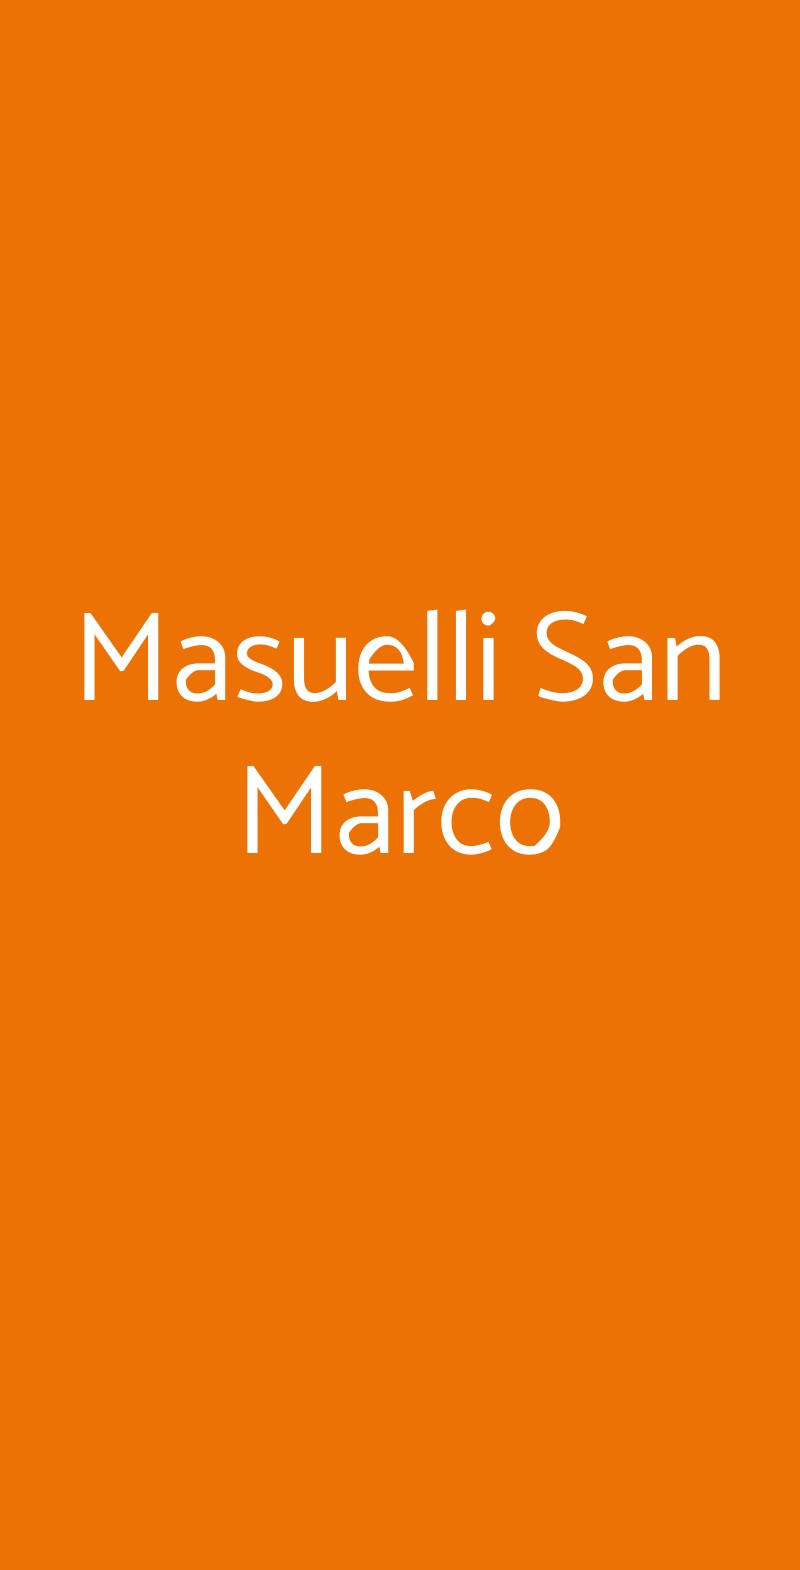 Masuelli San Marco Milano menù 1 pagina